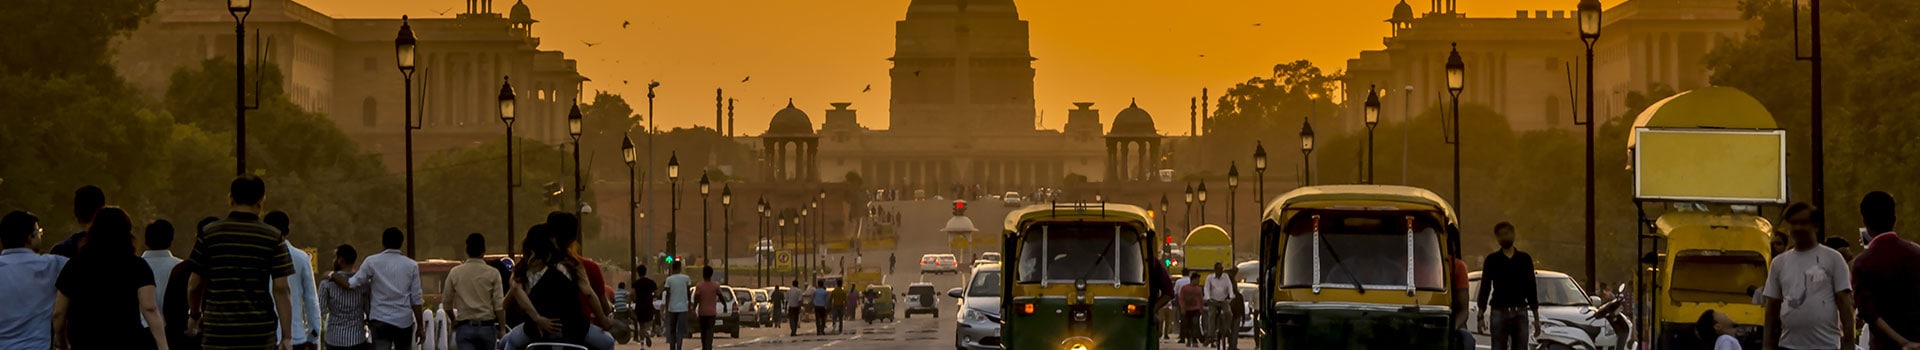 Bombay - Delhi